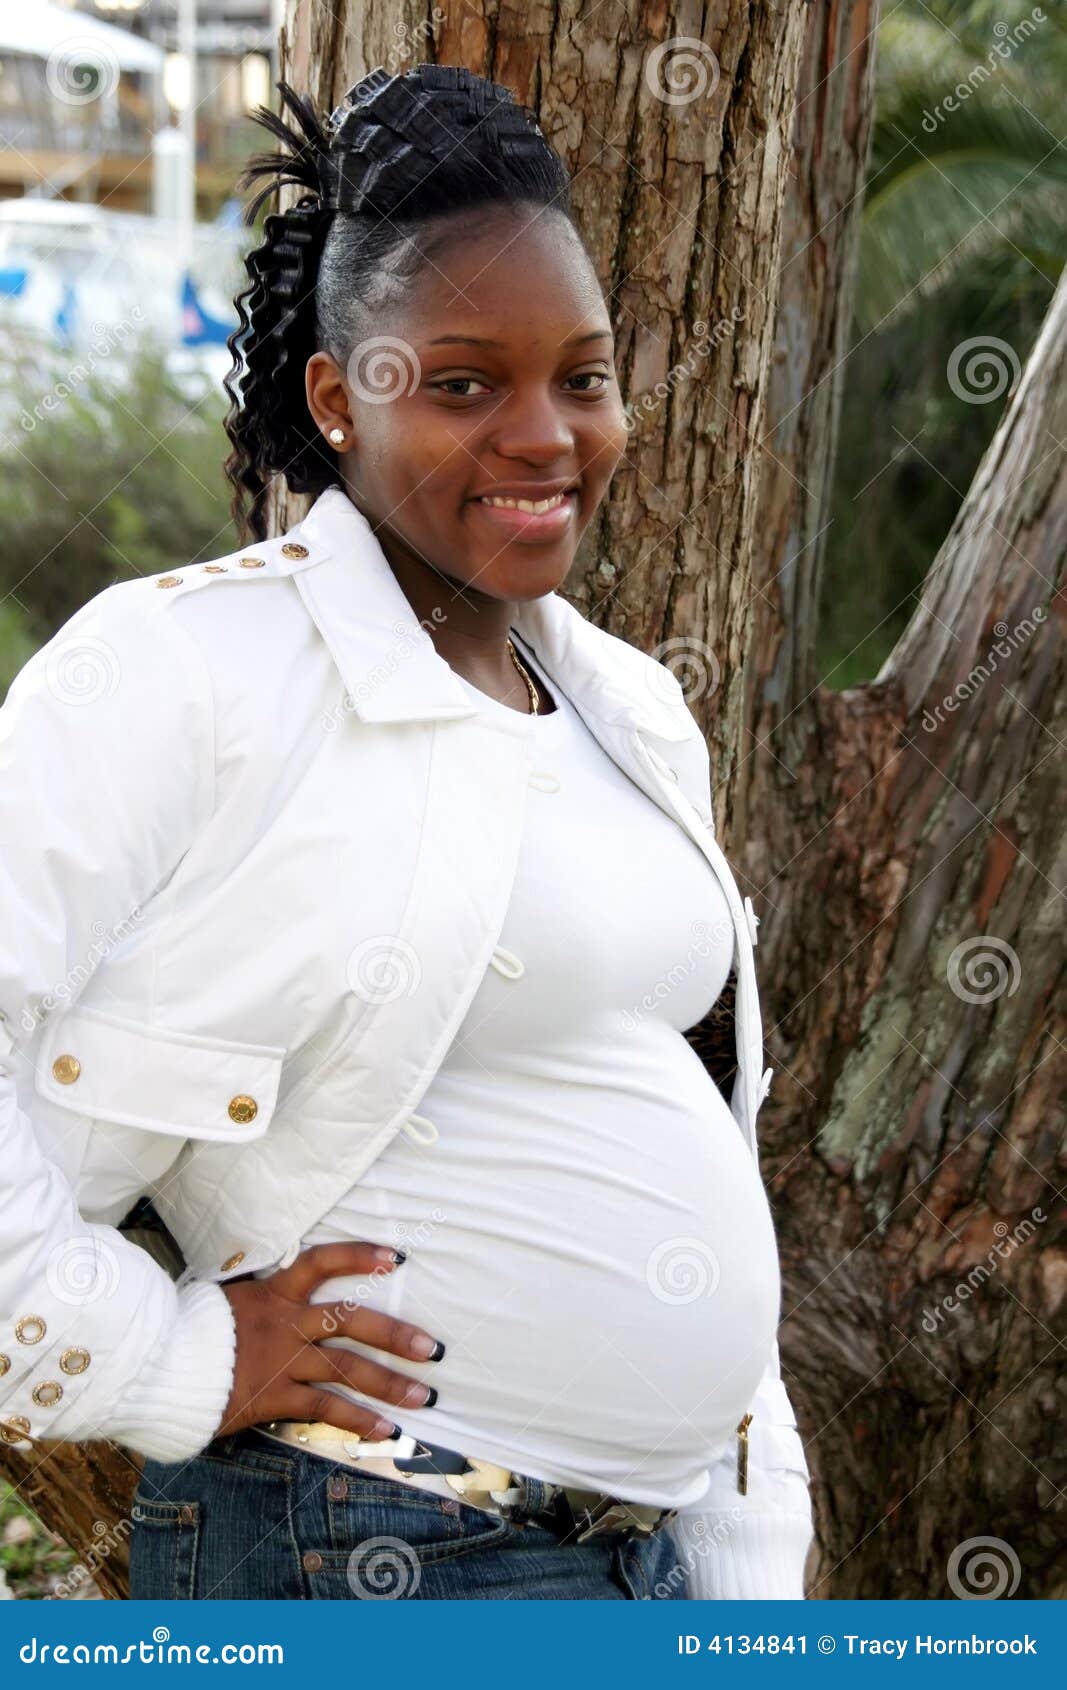 Pregnant Teen Girls